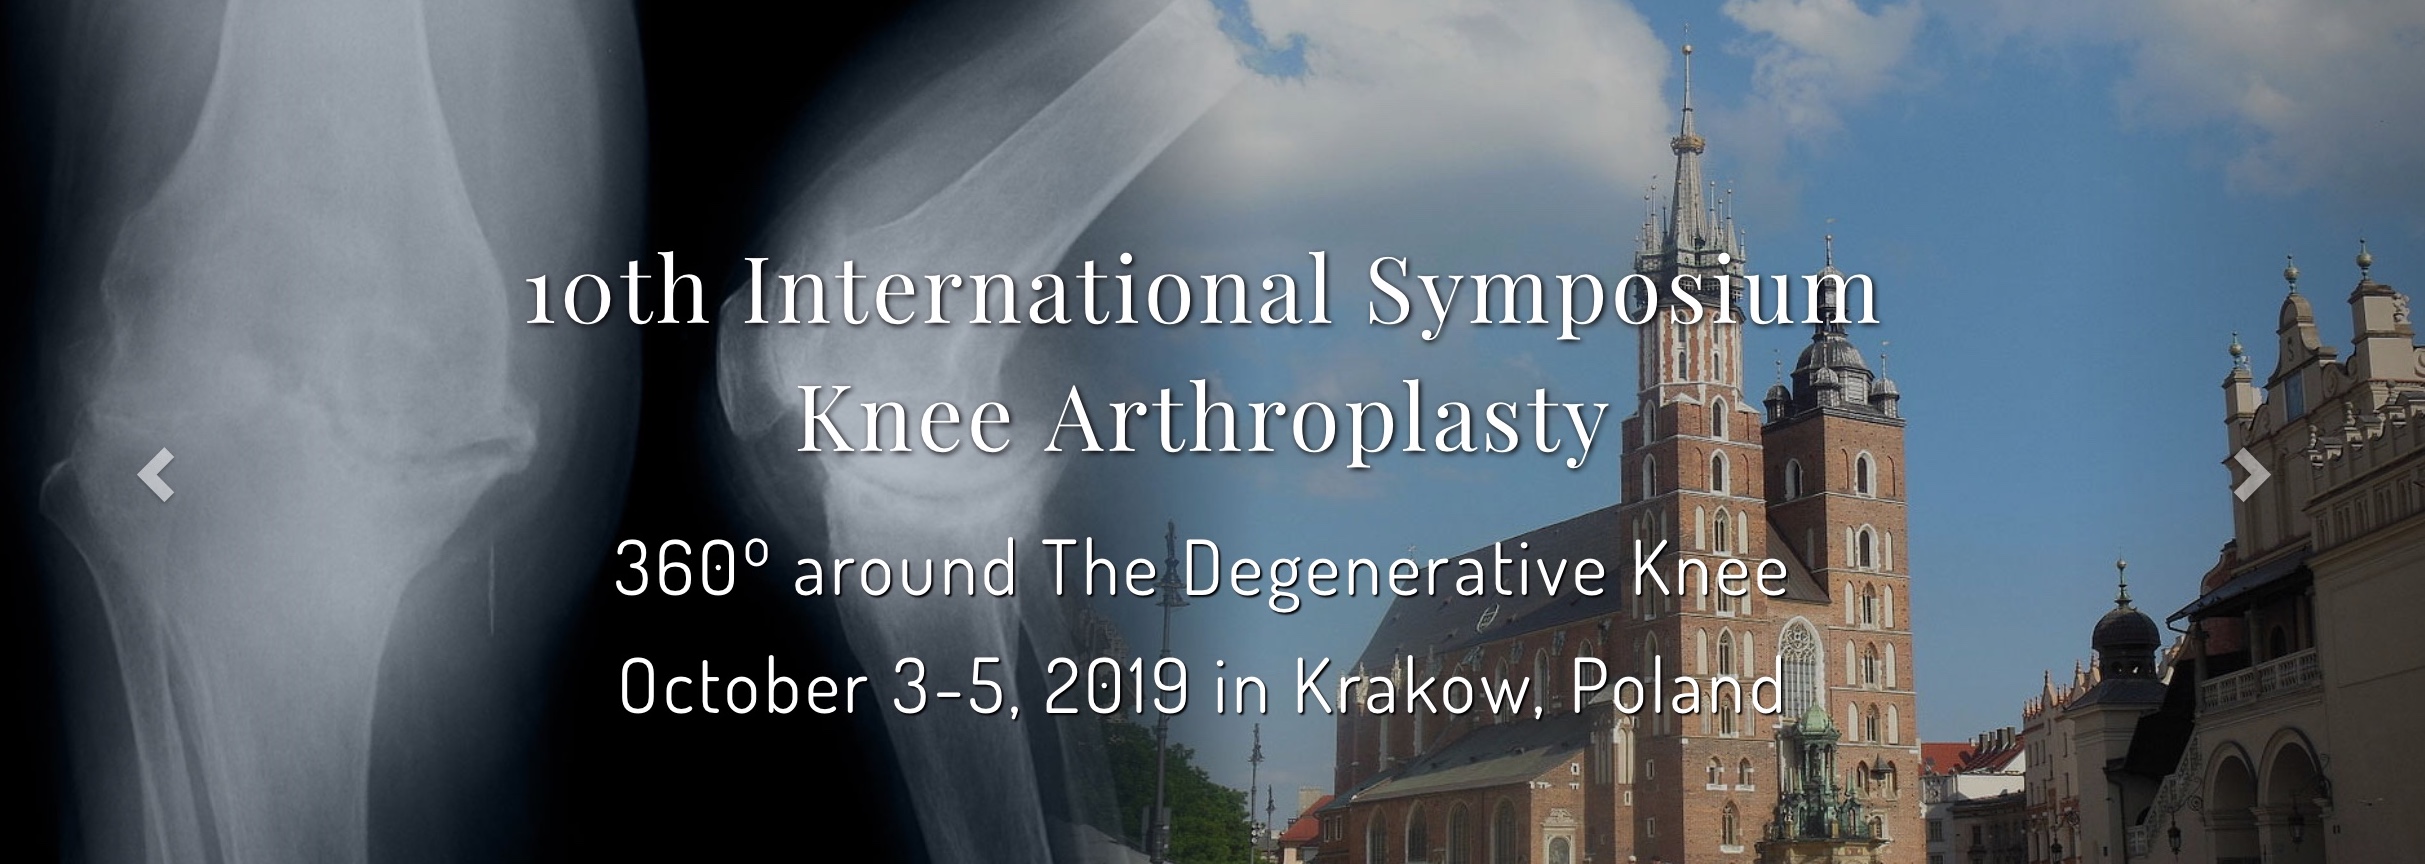 10th International Symposium: Knee Arthroplasty - 3600 around The Degenerative Knee